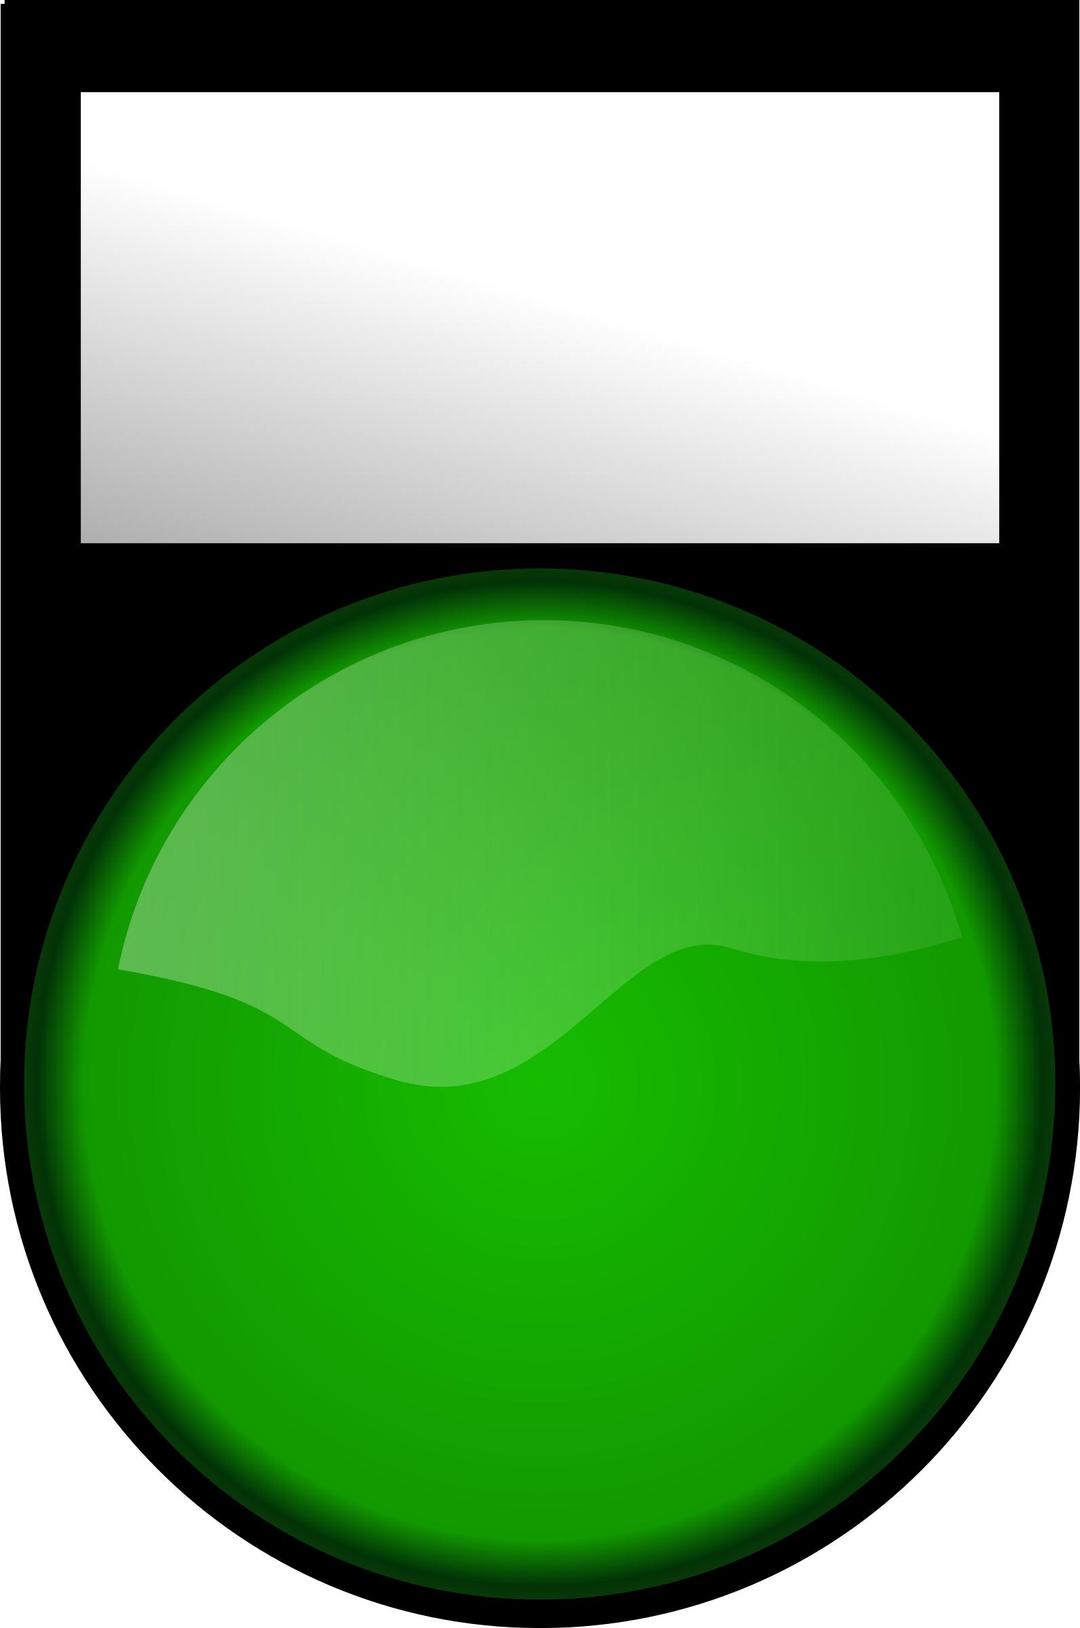 Voyant Vert Eteint - Green Light OFF png transparent